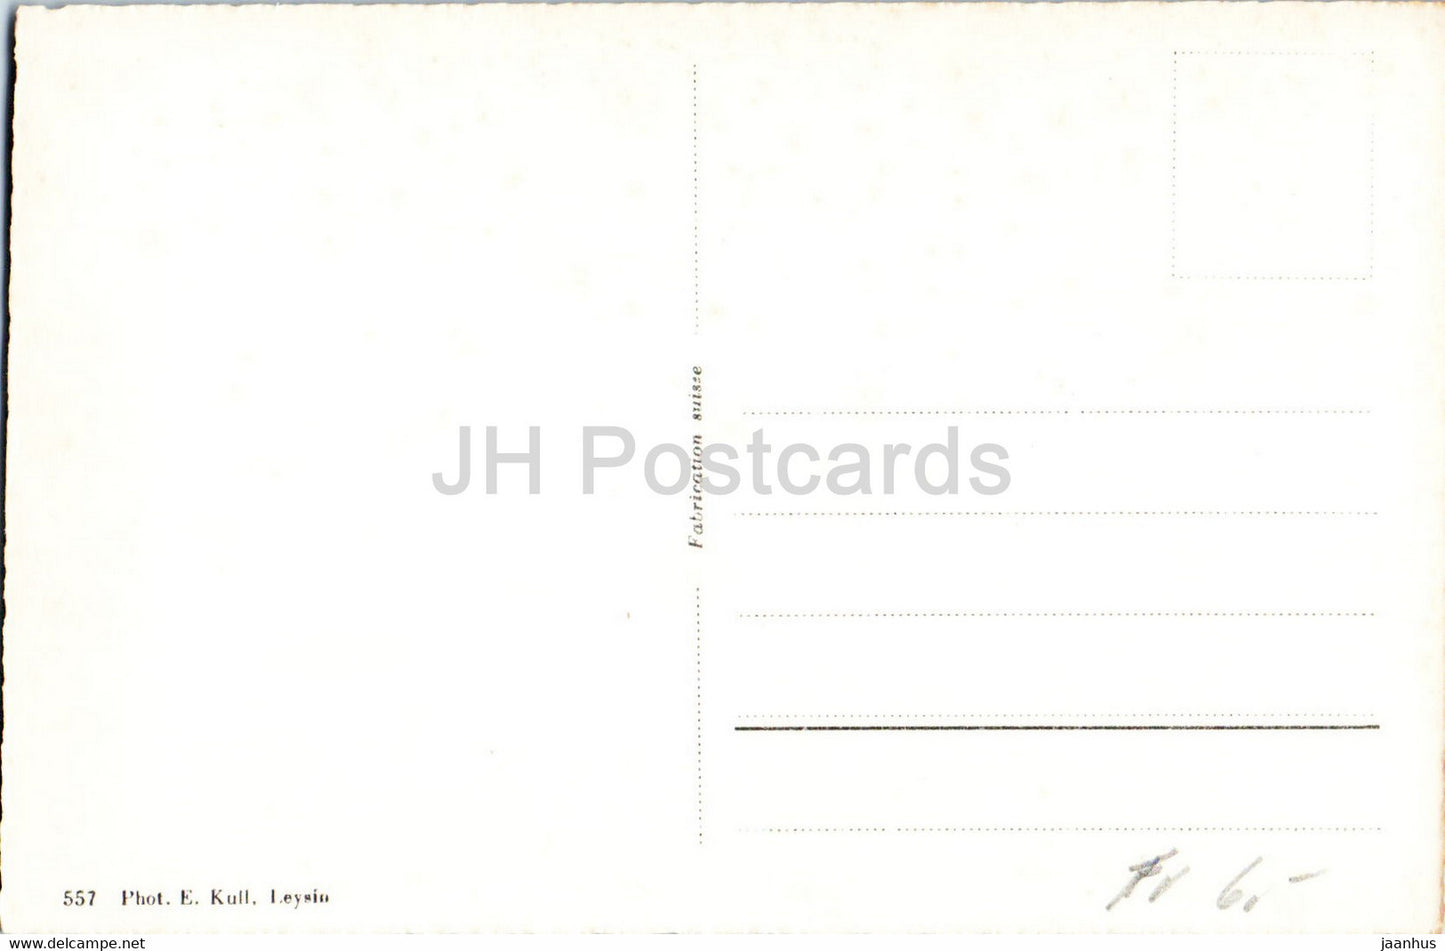 Leysin - Vue depuis la Crevasse - 557 - carte postale ancienne - Suisse - inutilisée